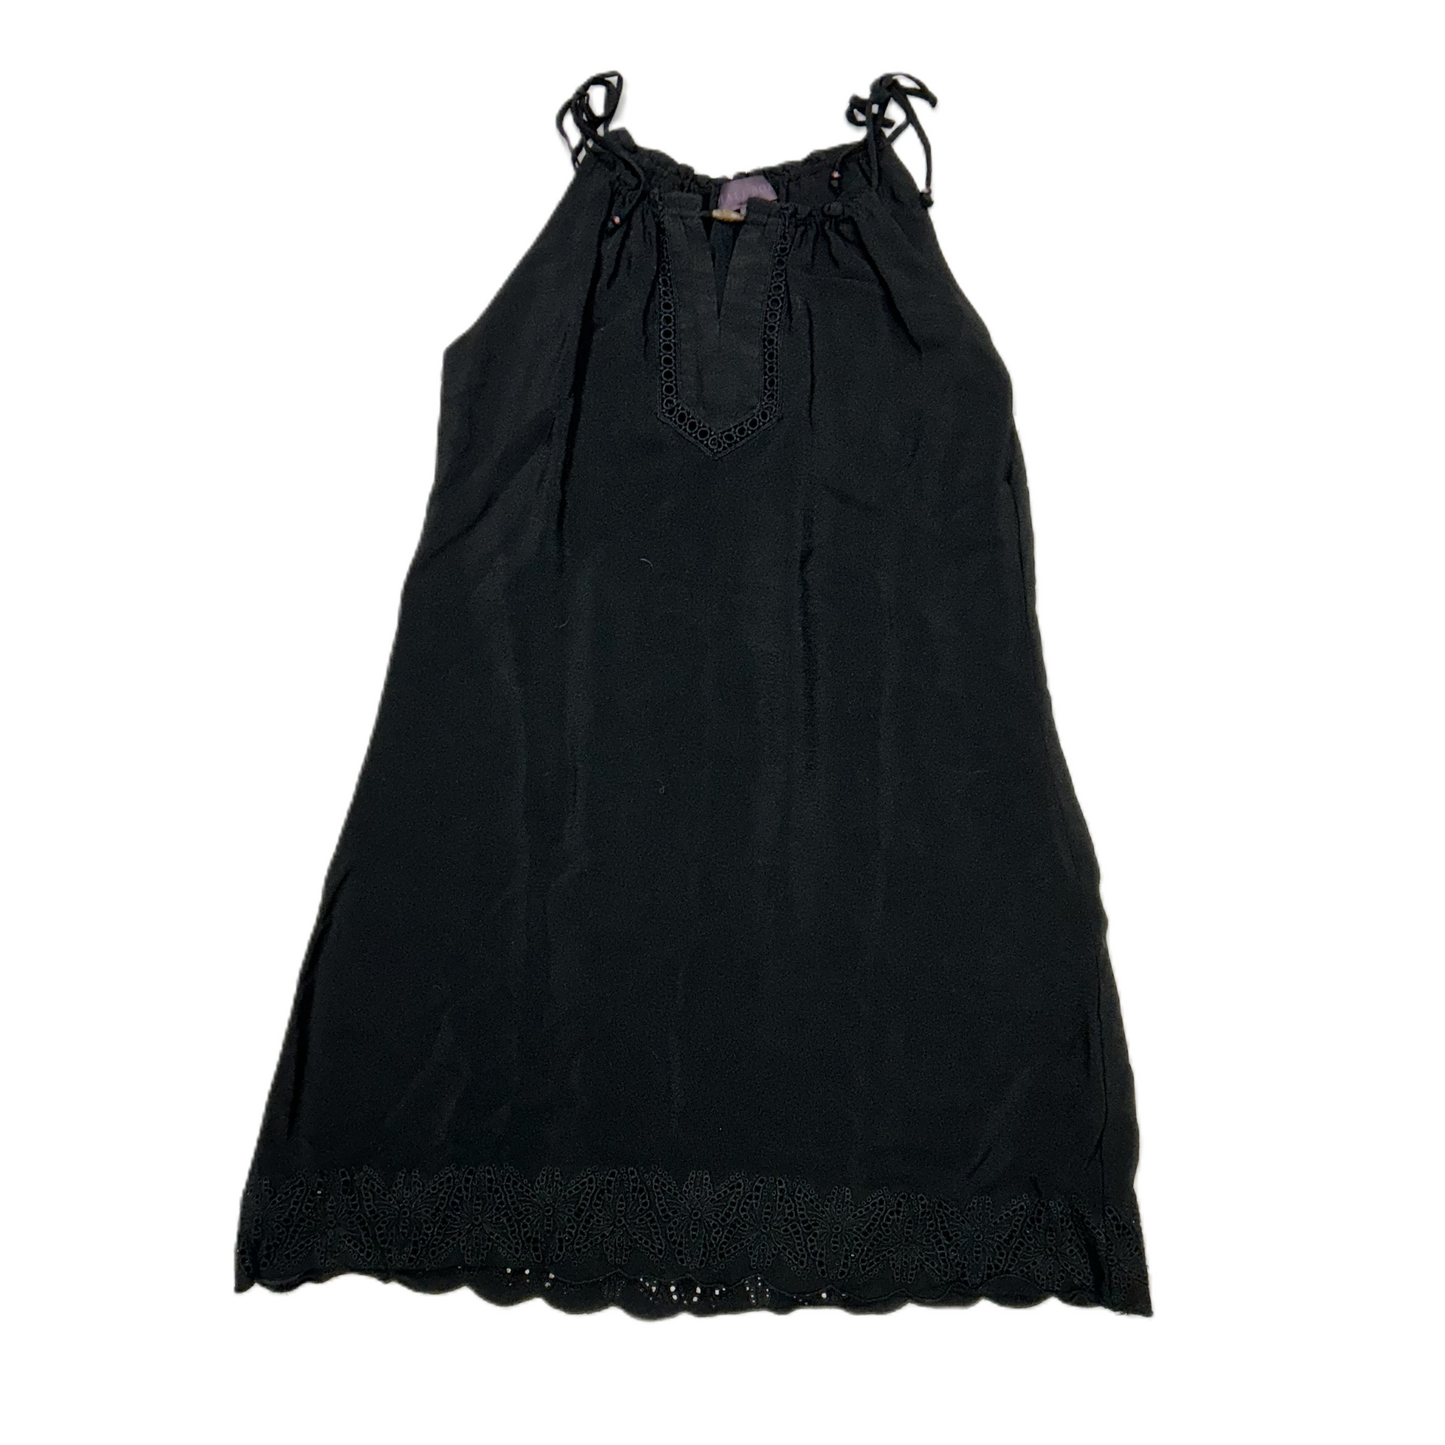 Black Dress Short Sleeveless By Hale Bob, Size: S